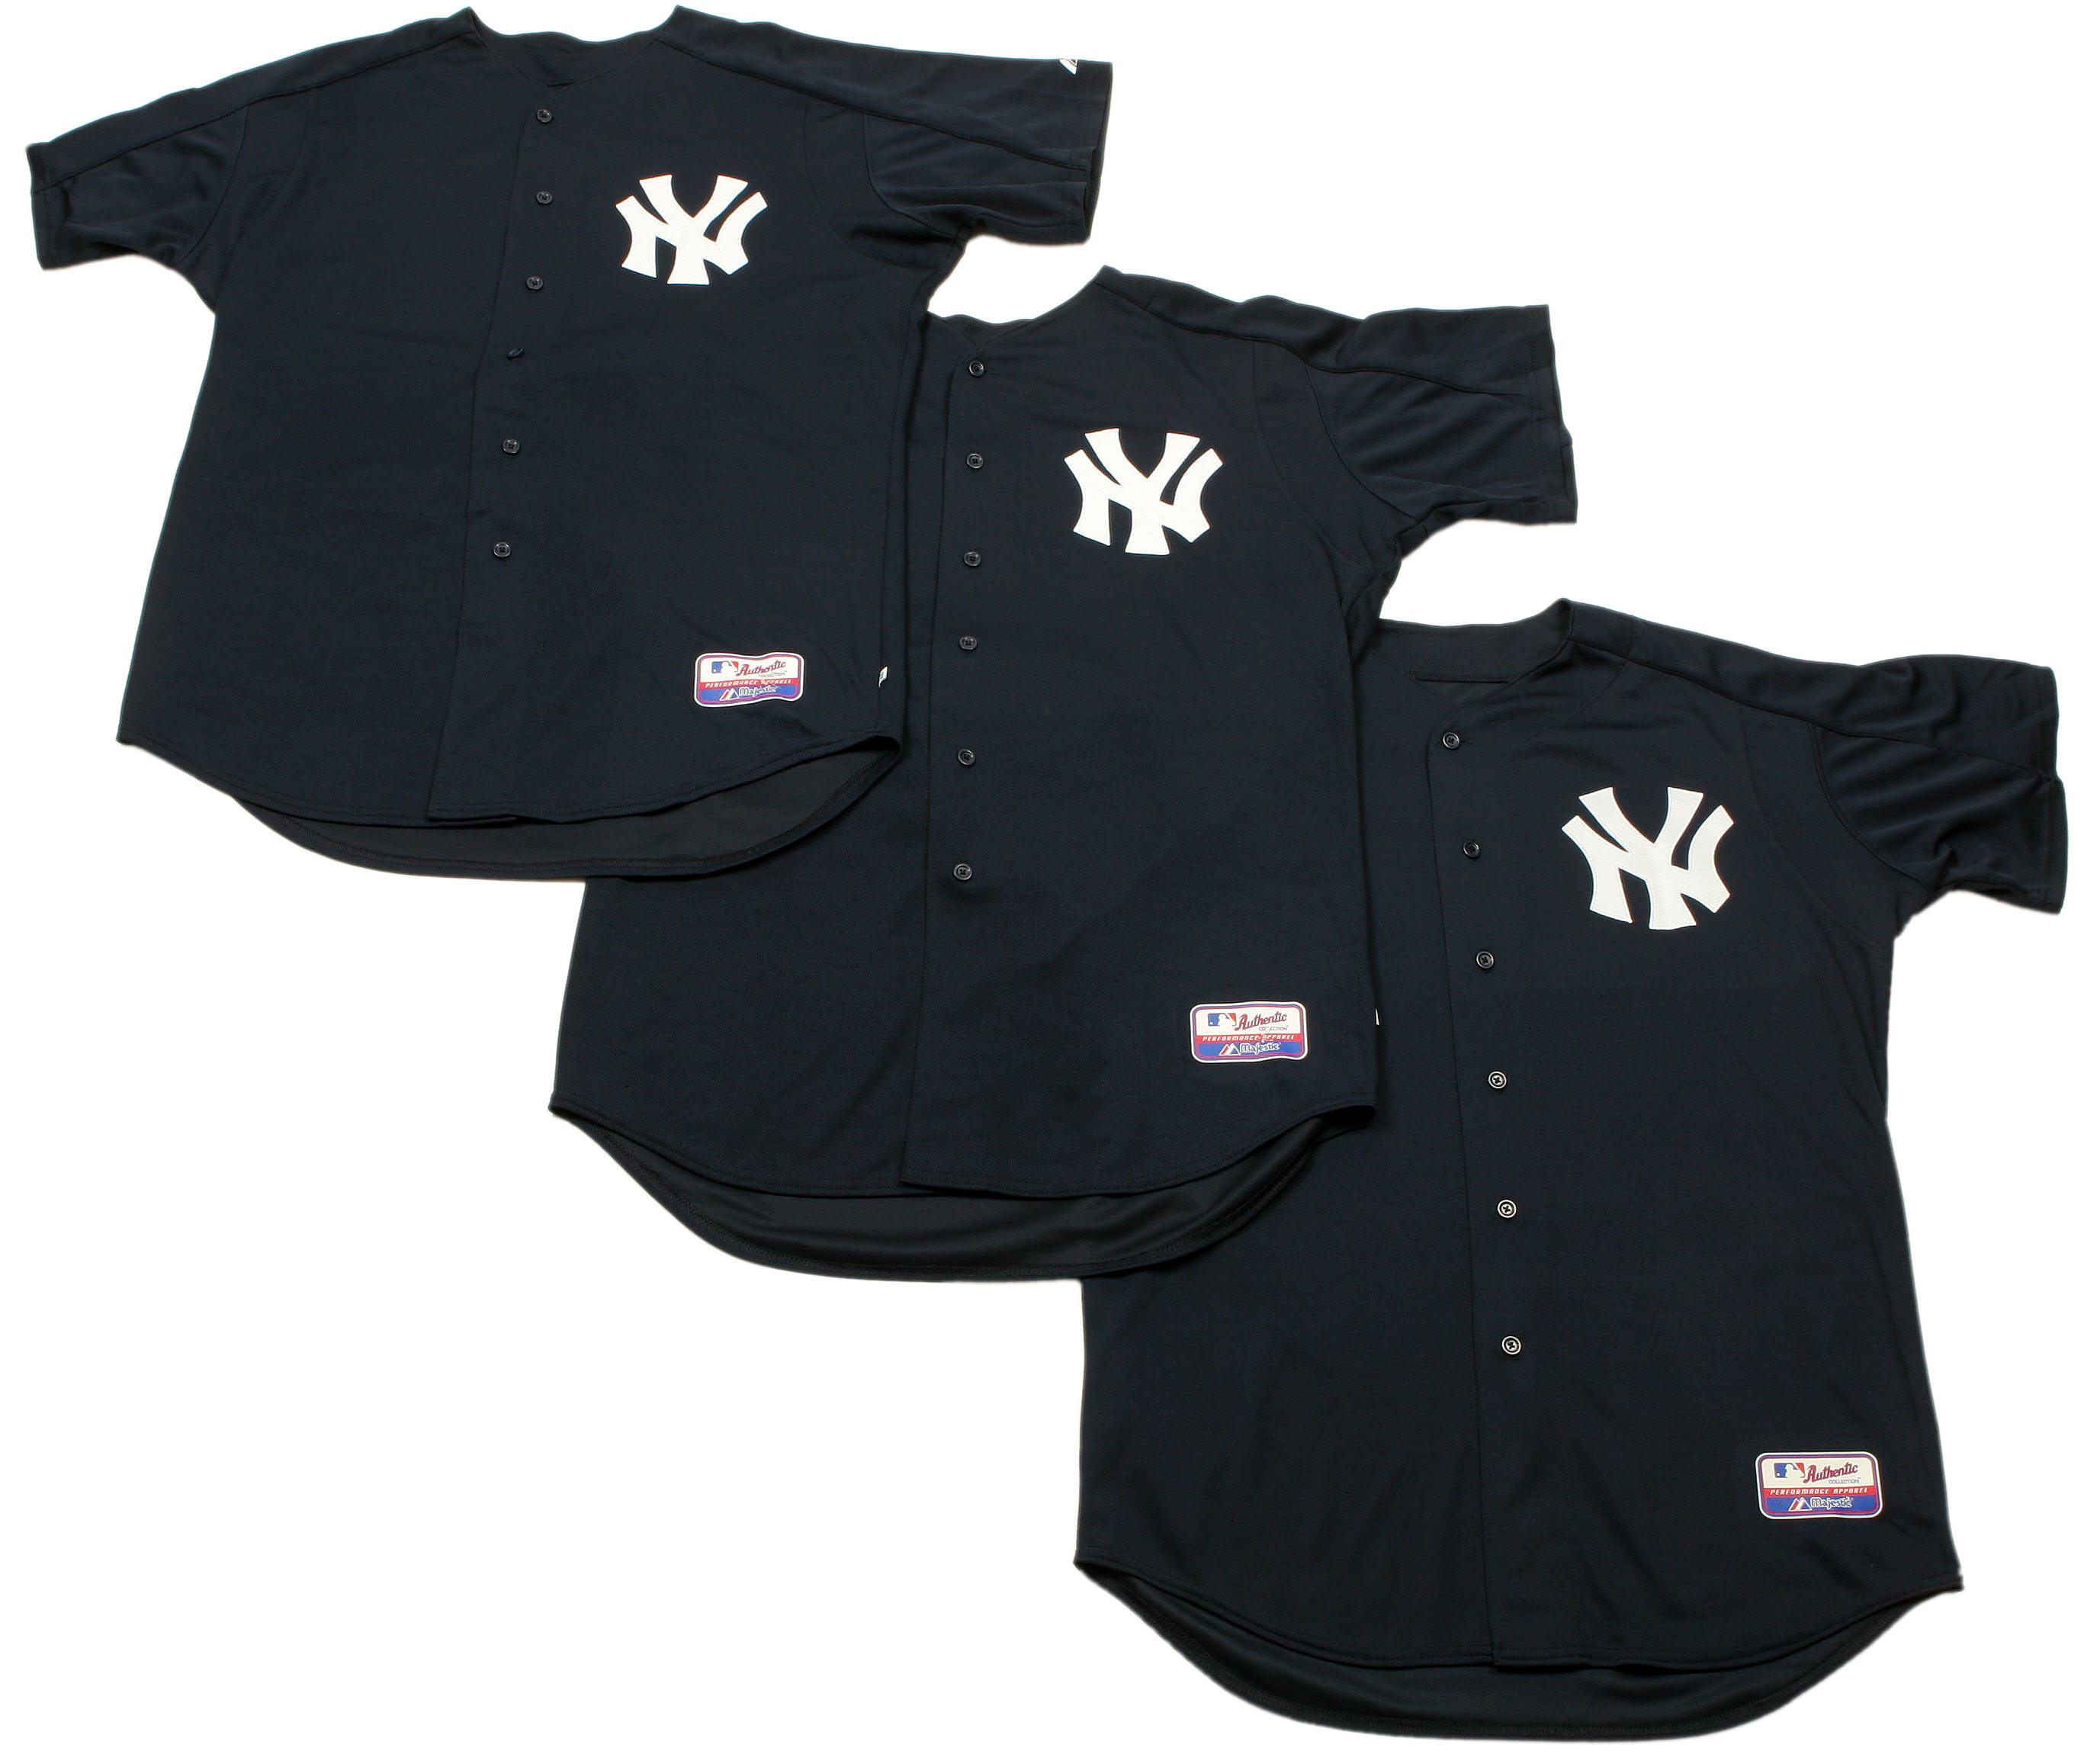 2004 New York Yankees Batting Practice Jerseys From Japanese